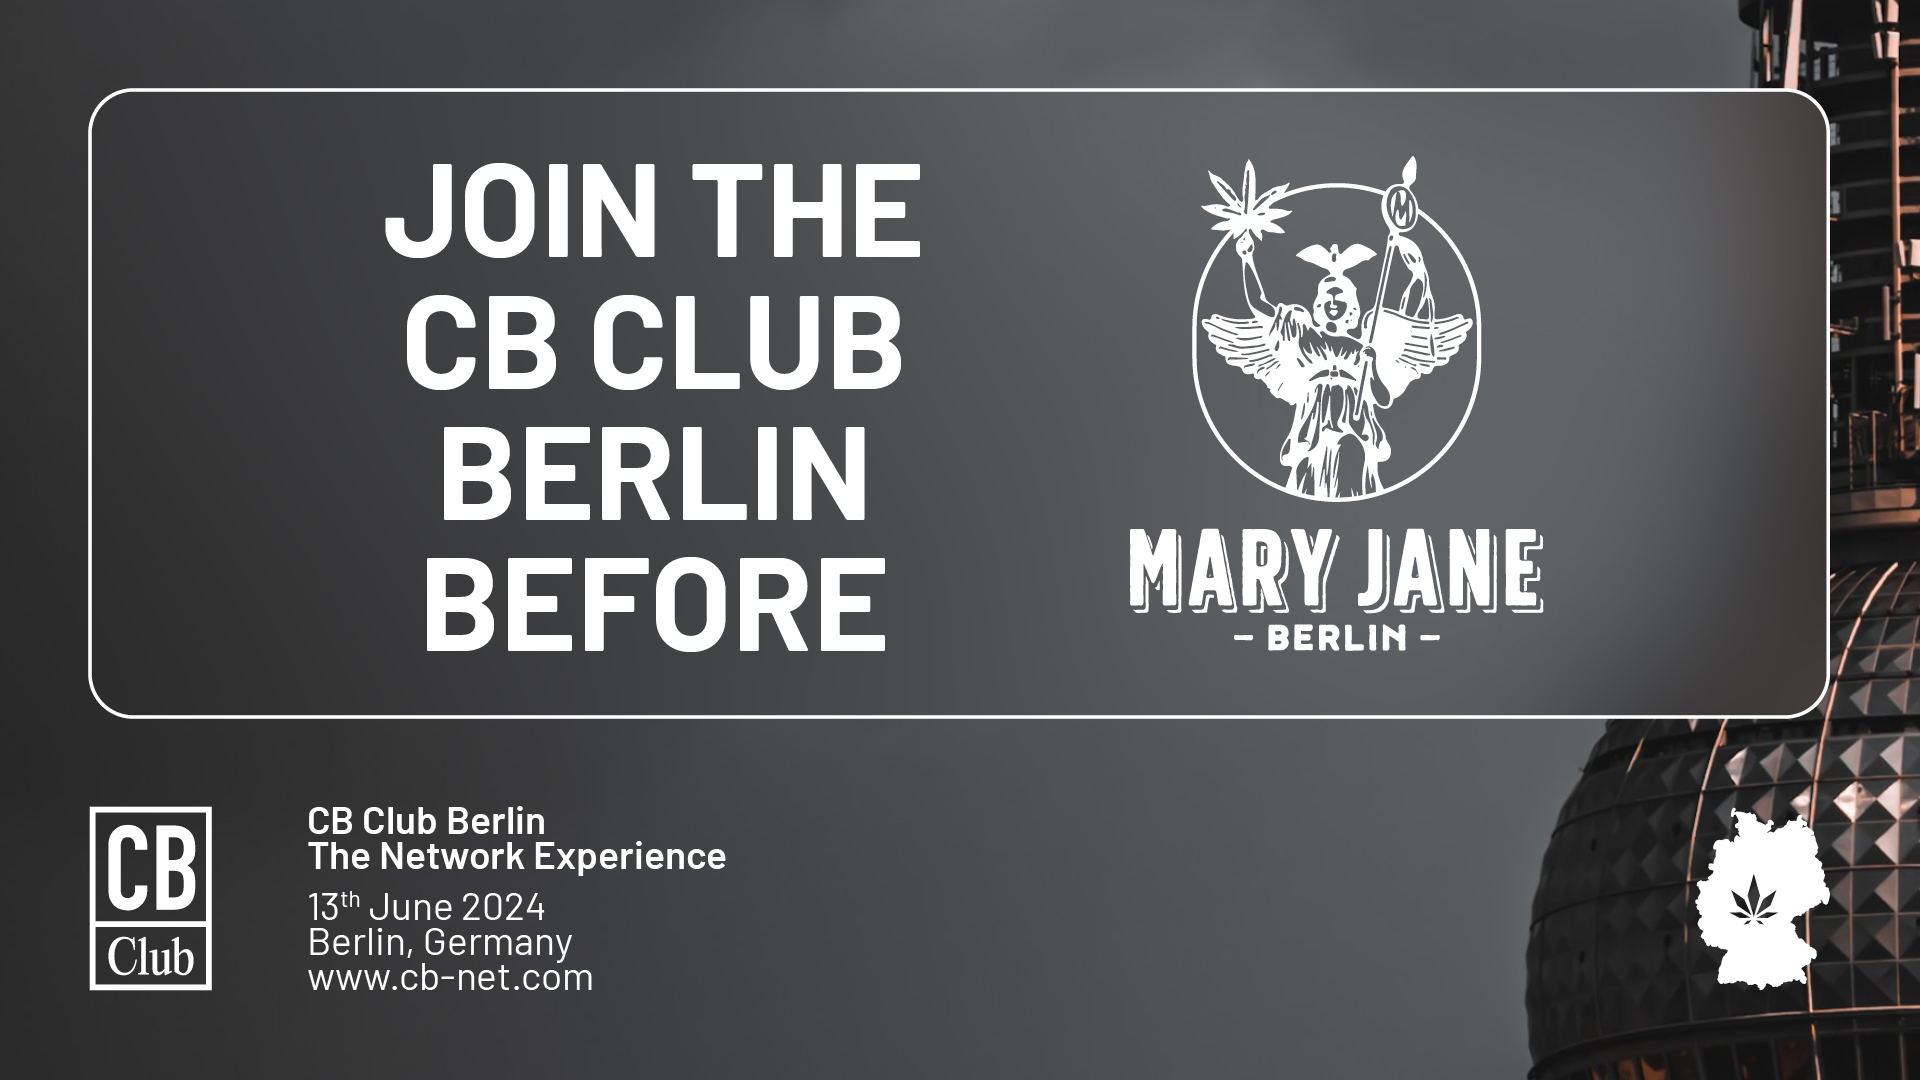 Berlin: CB Club Berlin - The Network Experience